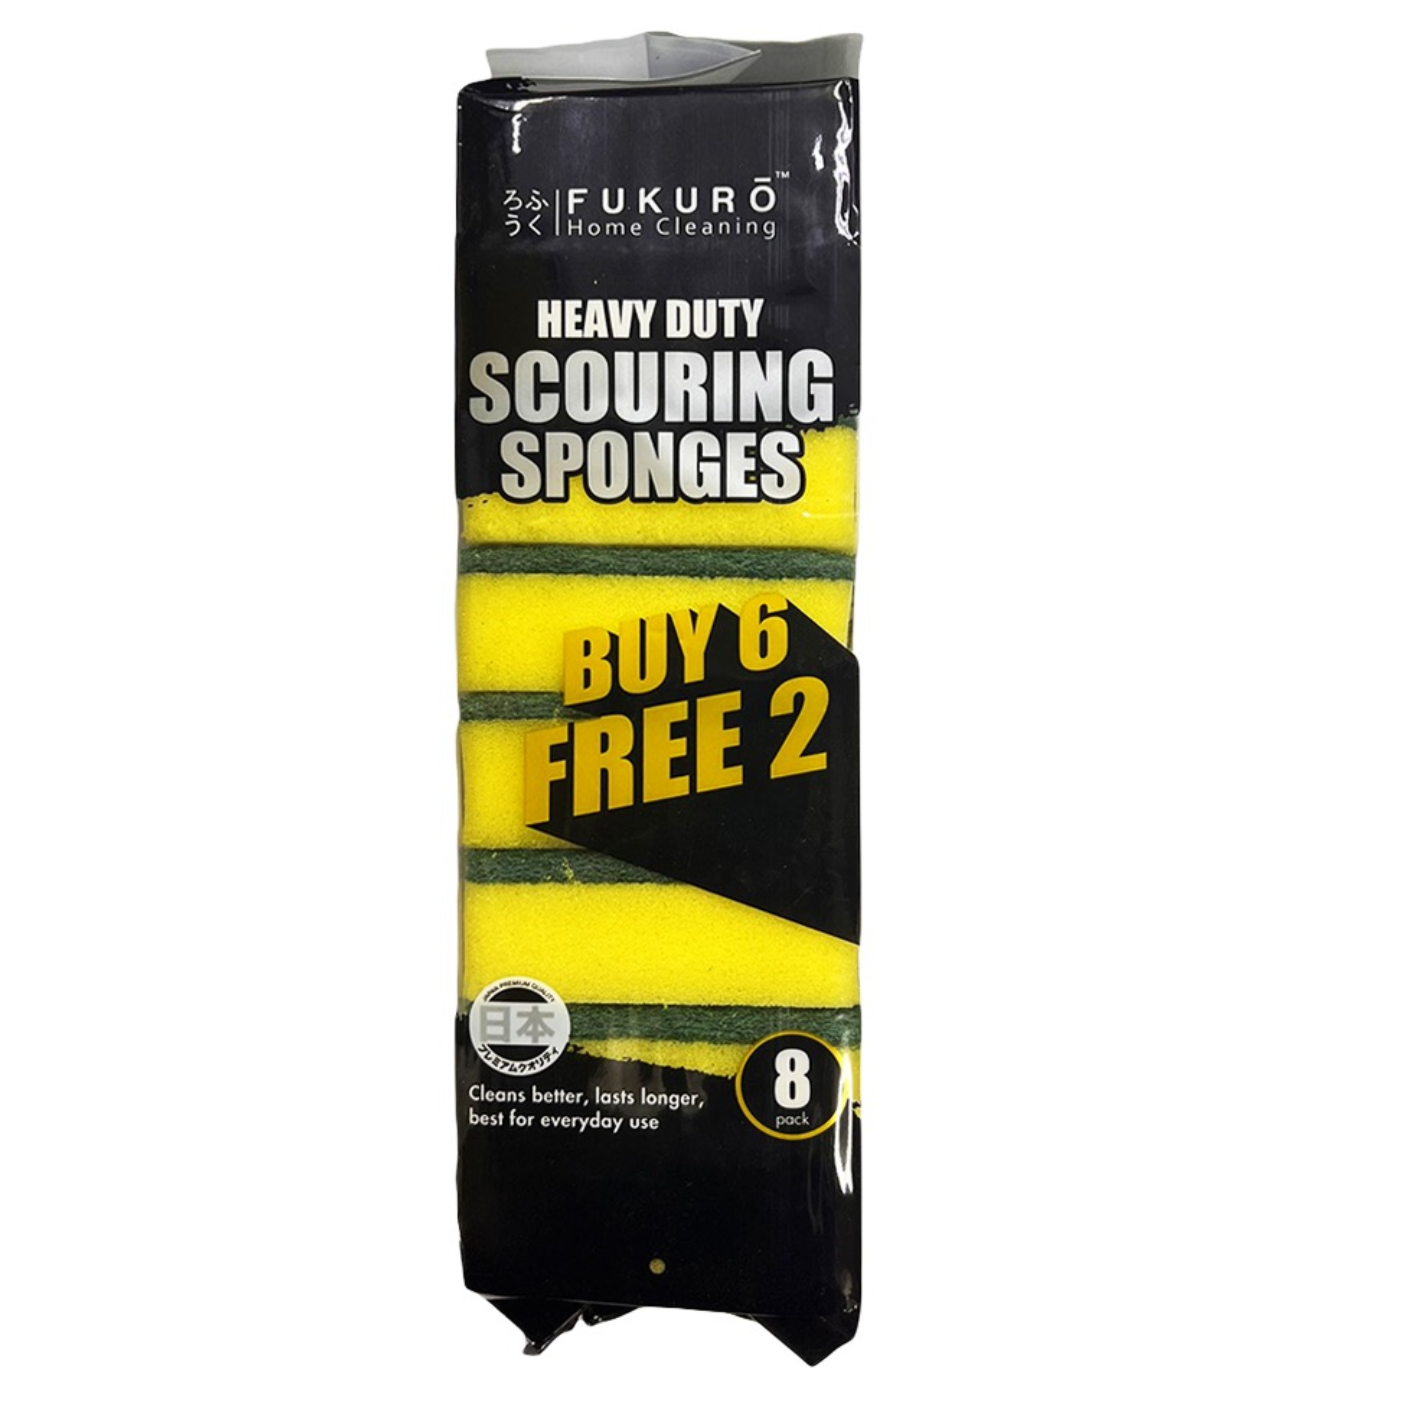 FUKURO Heavy Duty Scouring Sponges 6 FREE 2 PACK